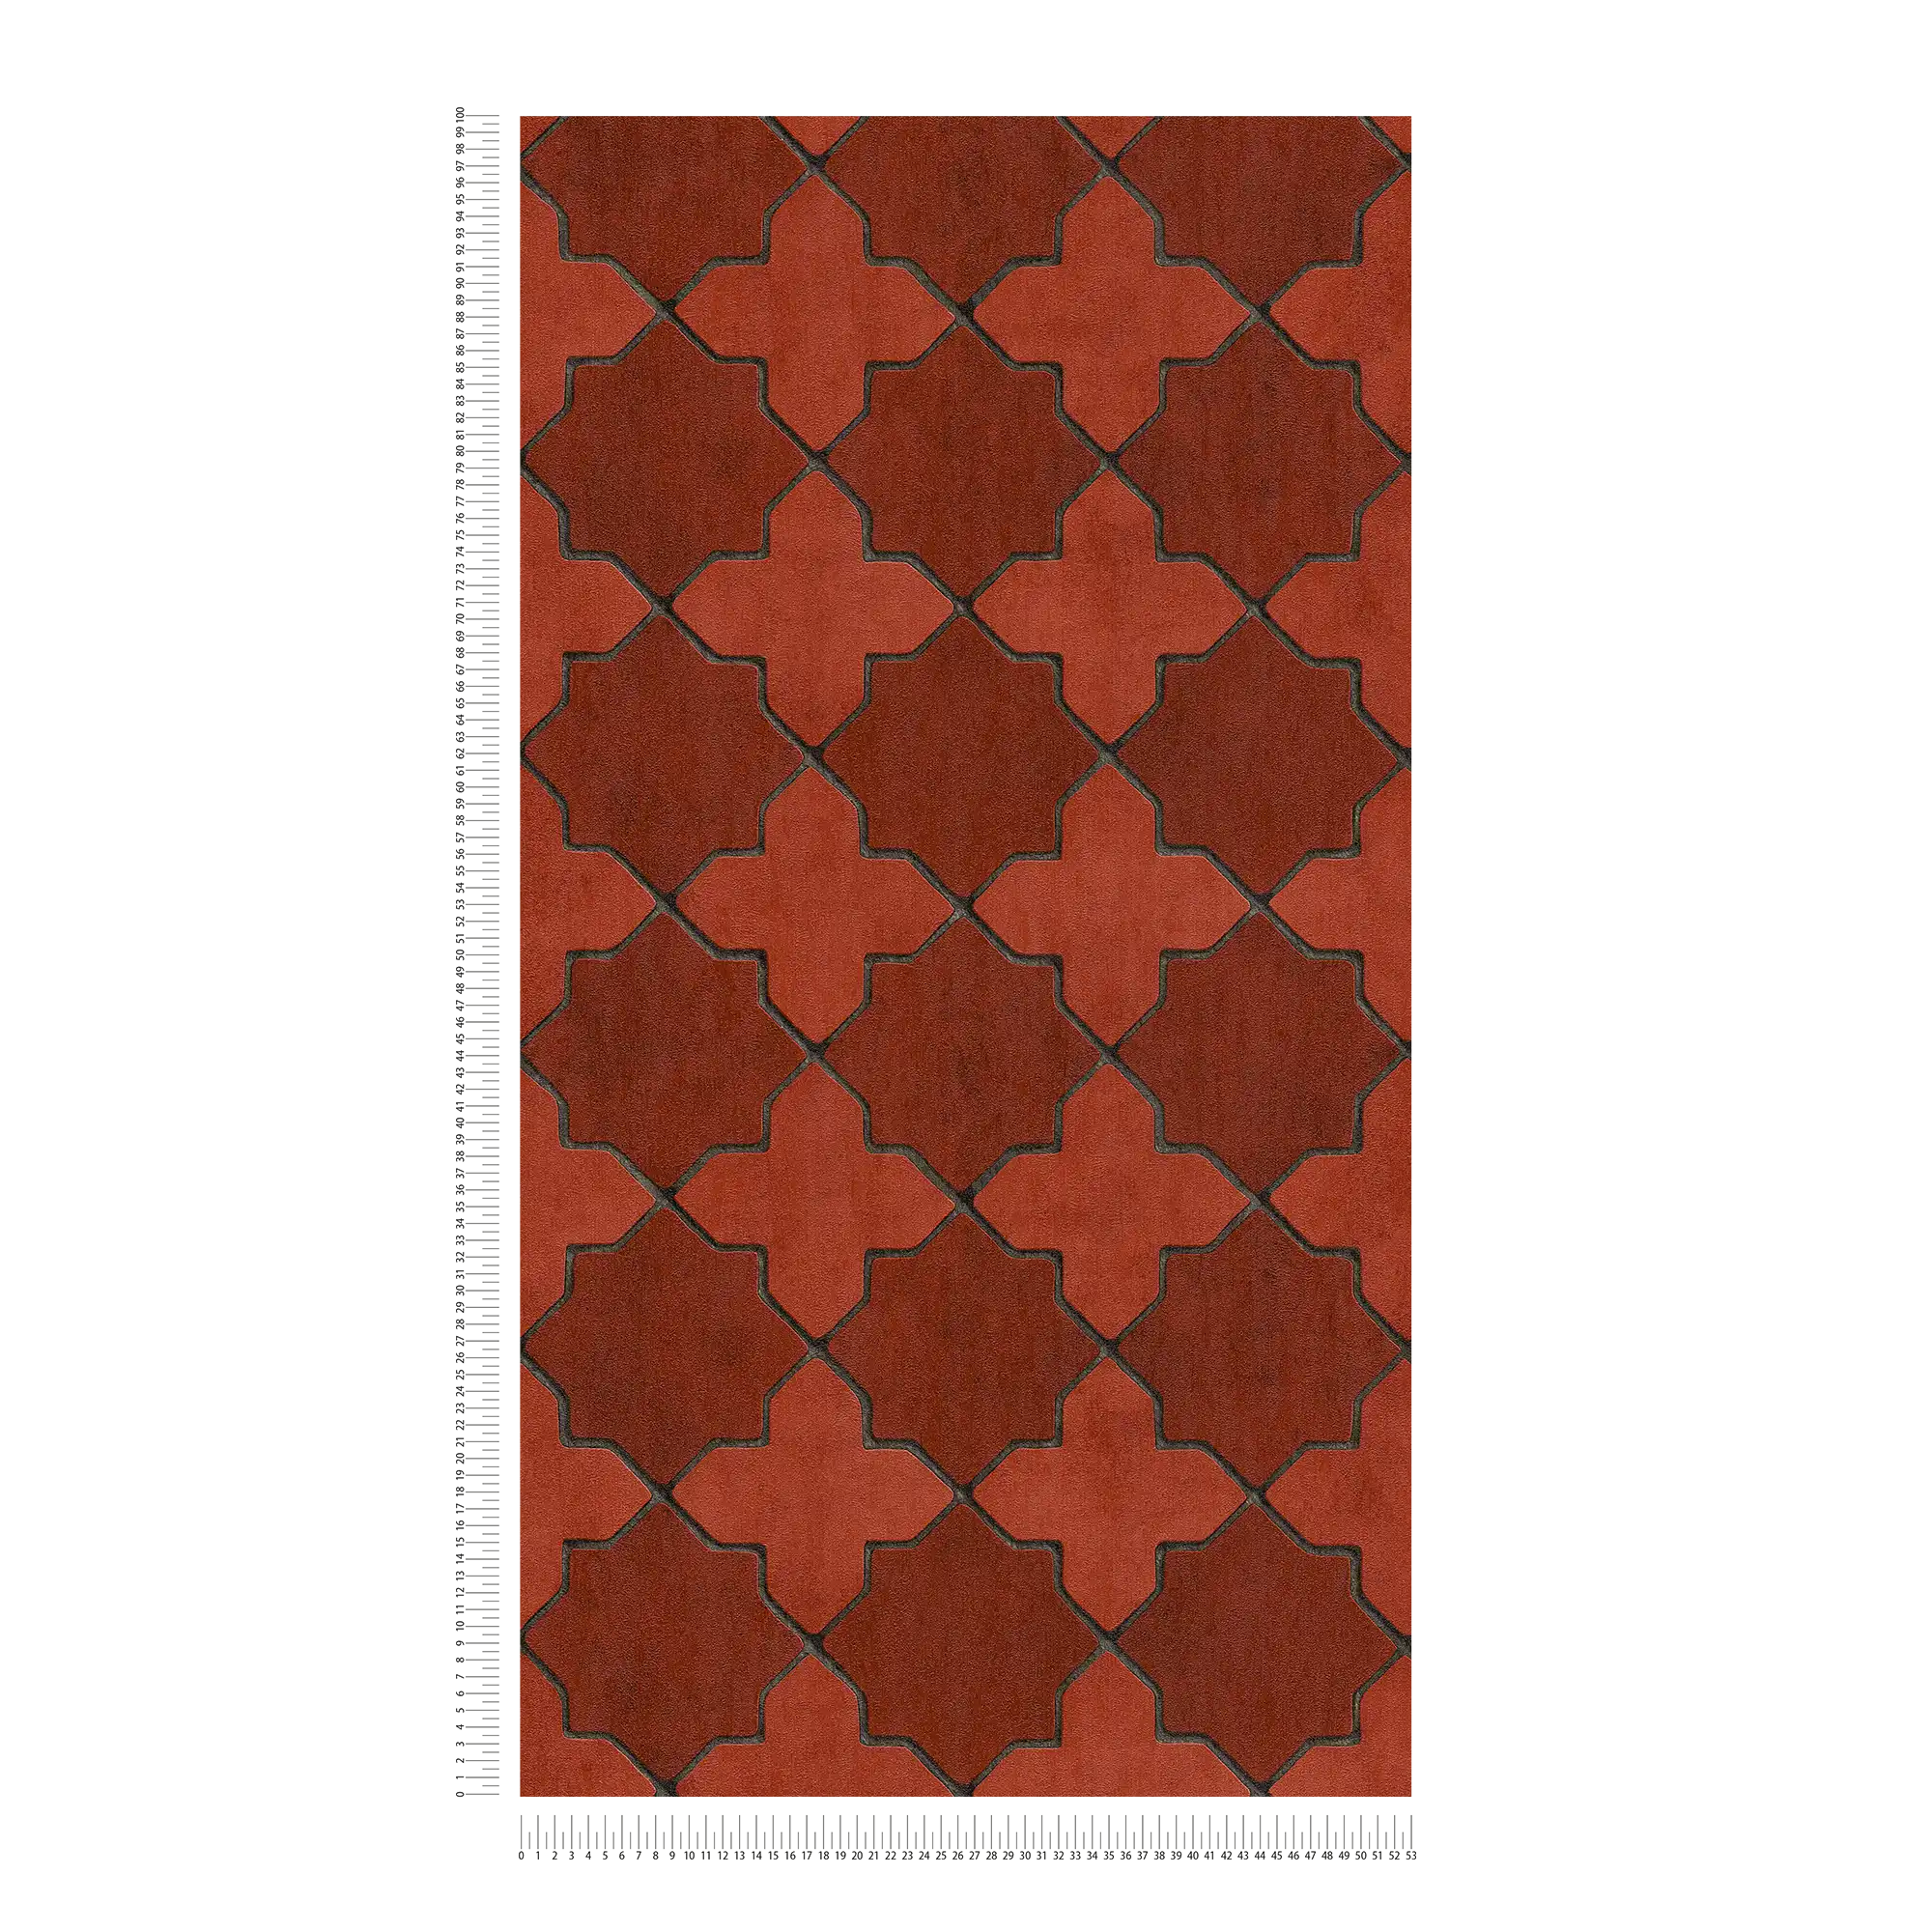             Tile wallpaper oriental - red, grey, black
        